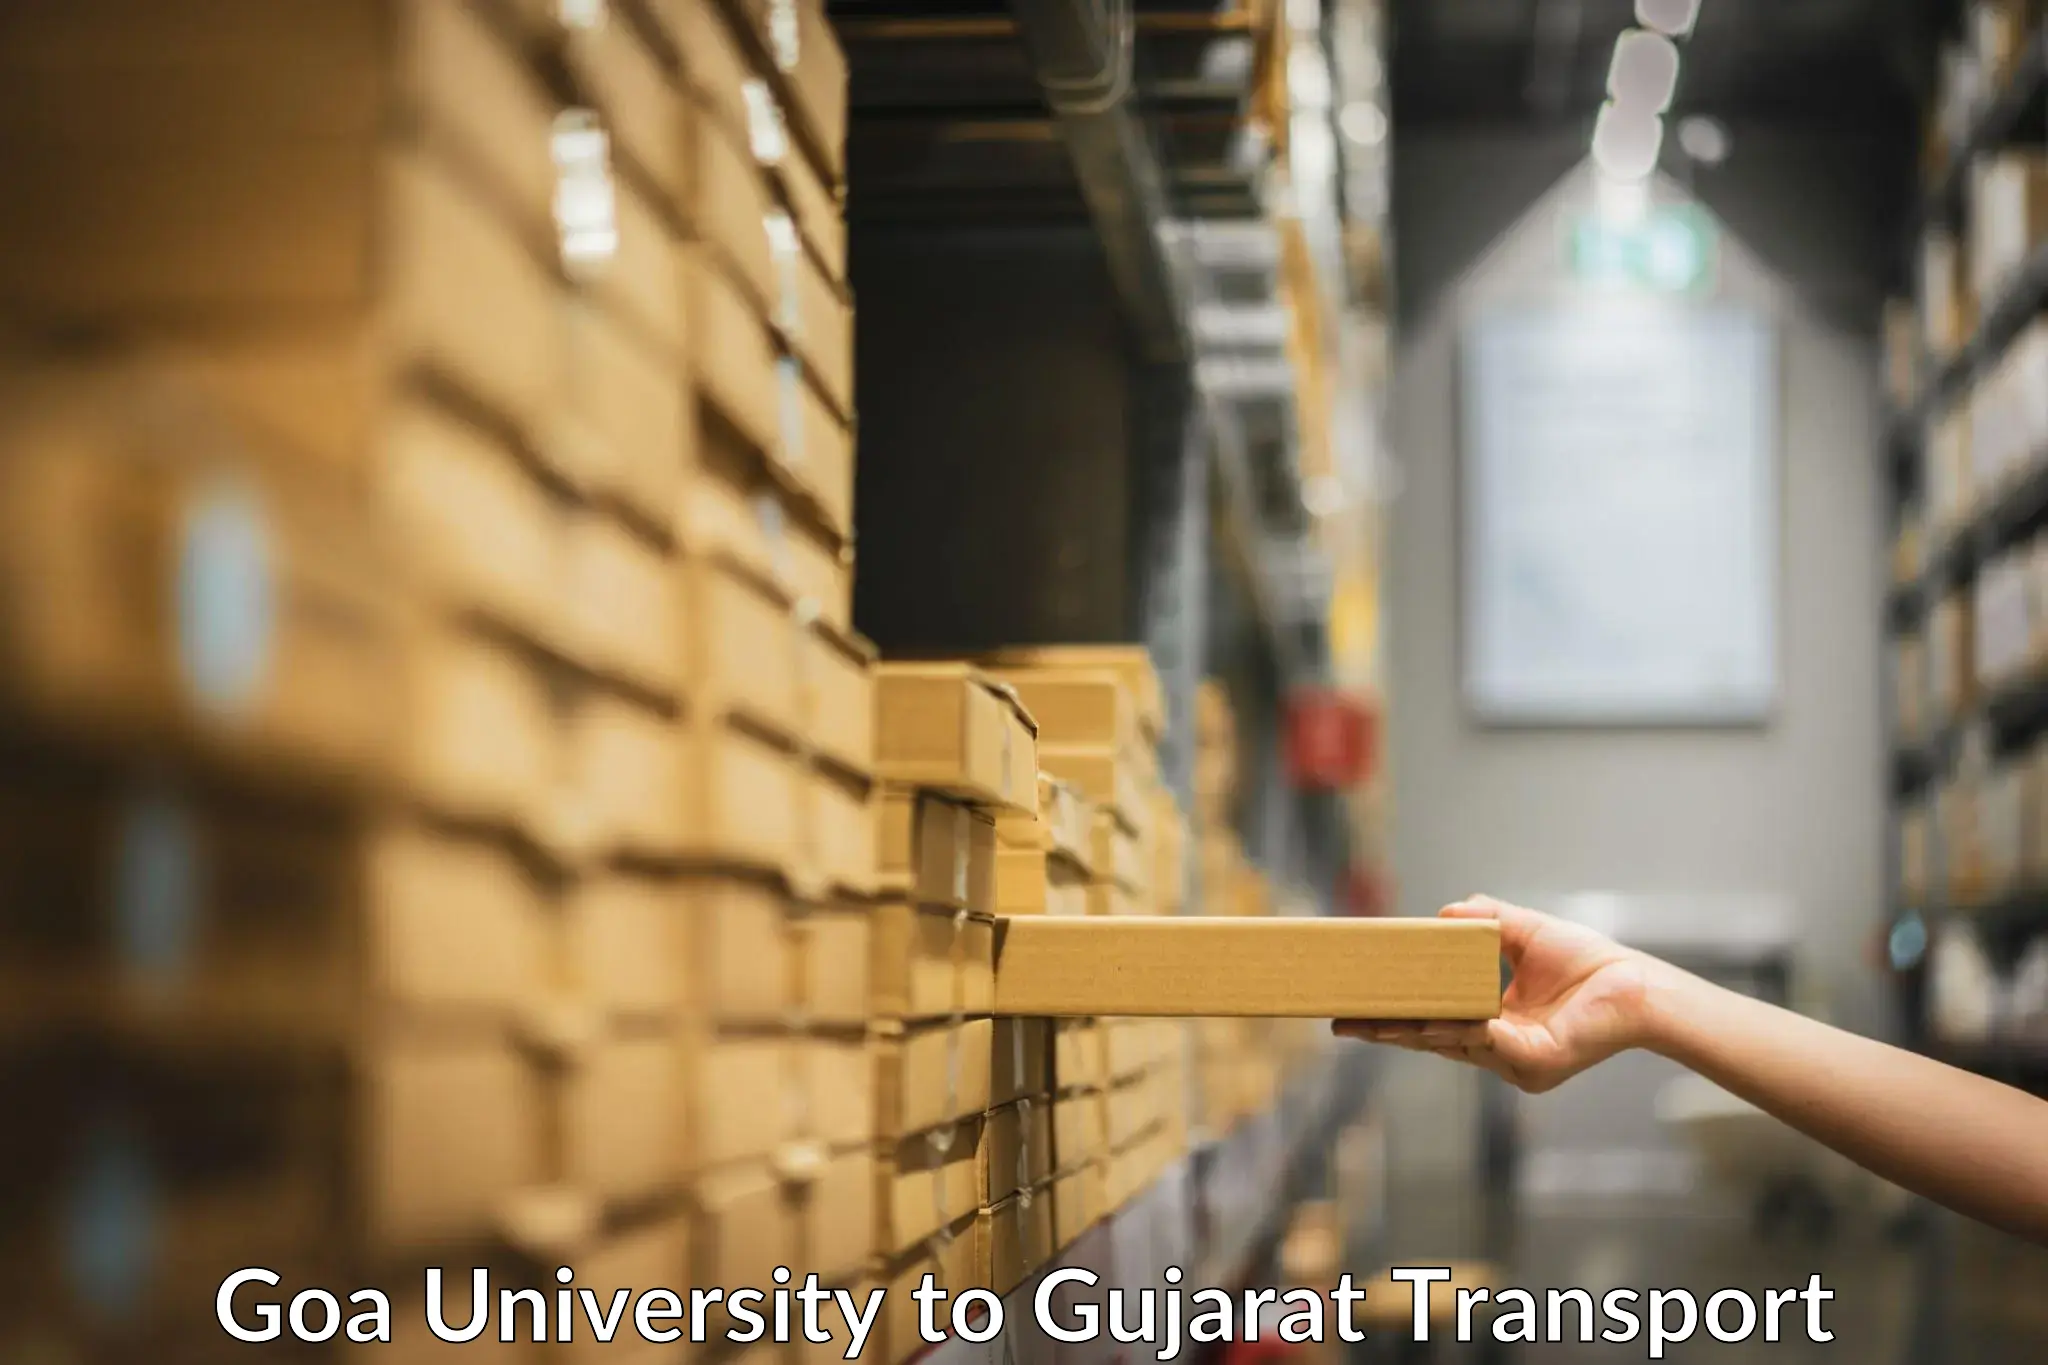 Online transport service Goa University to Gujarat